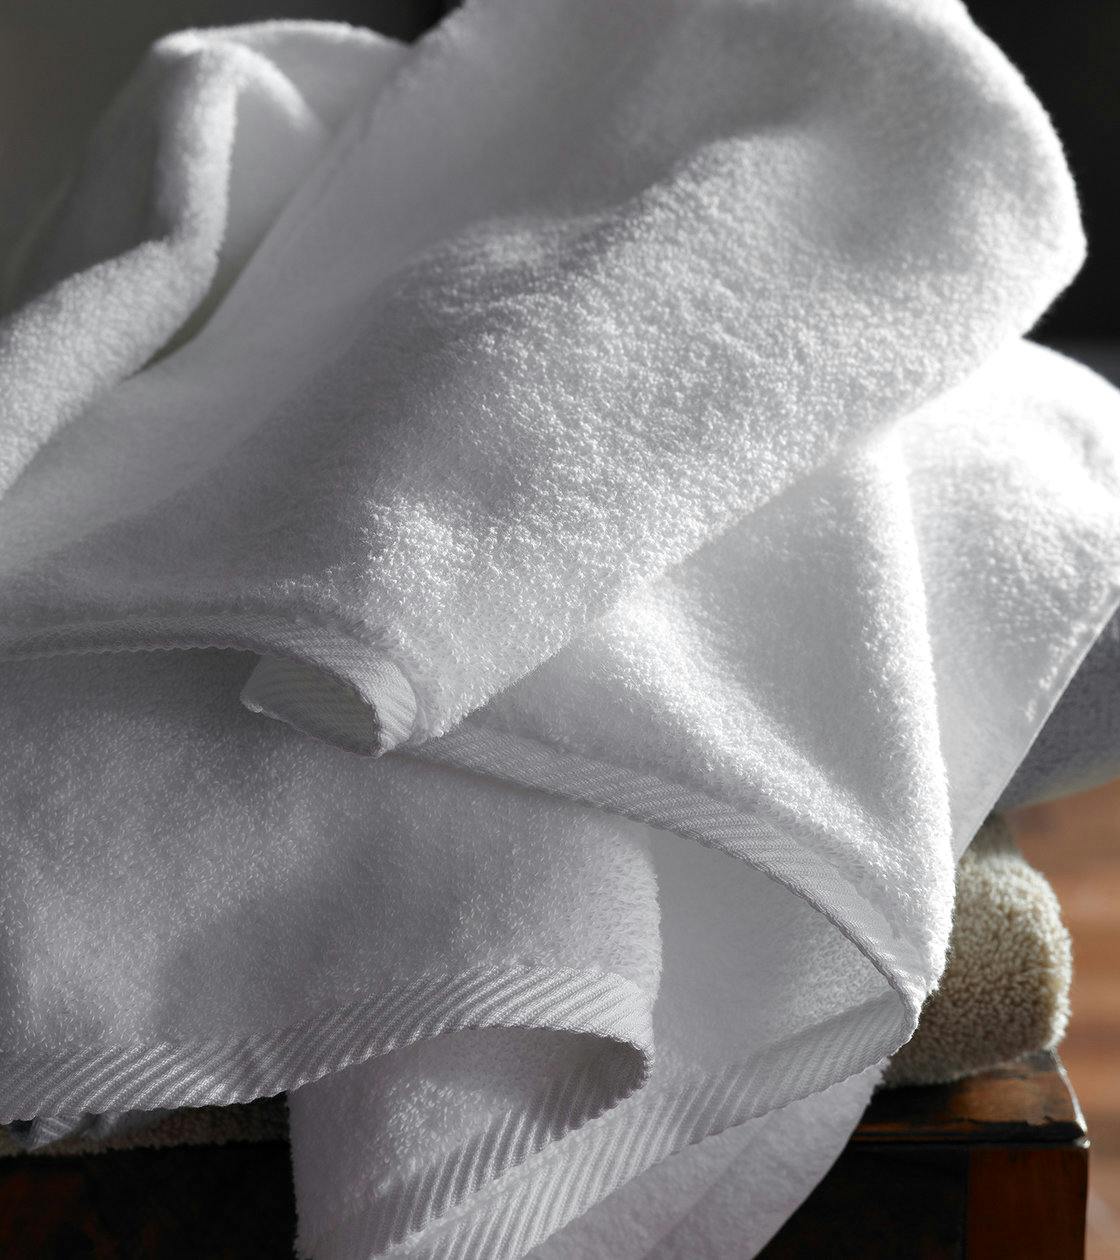 Matouk Milagro Bath Towel - Canary